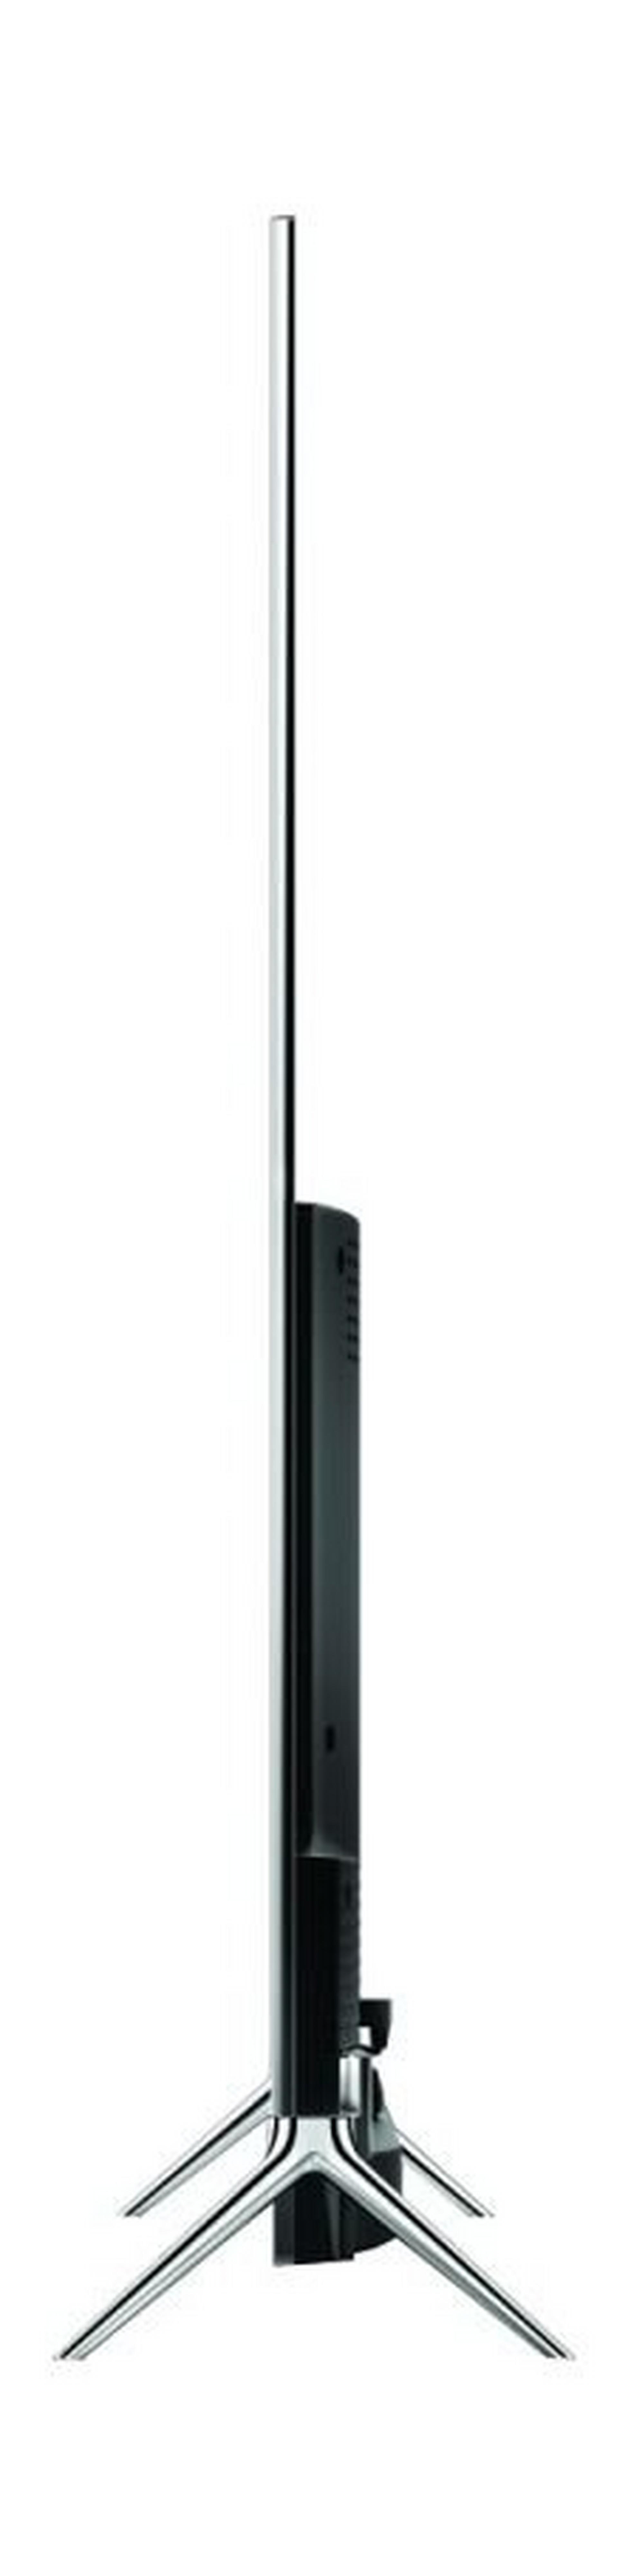 Skyworth 65-inch Ultra HD (2160p) Smart LED TV (65G9200)